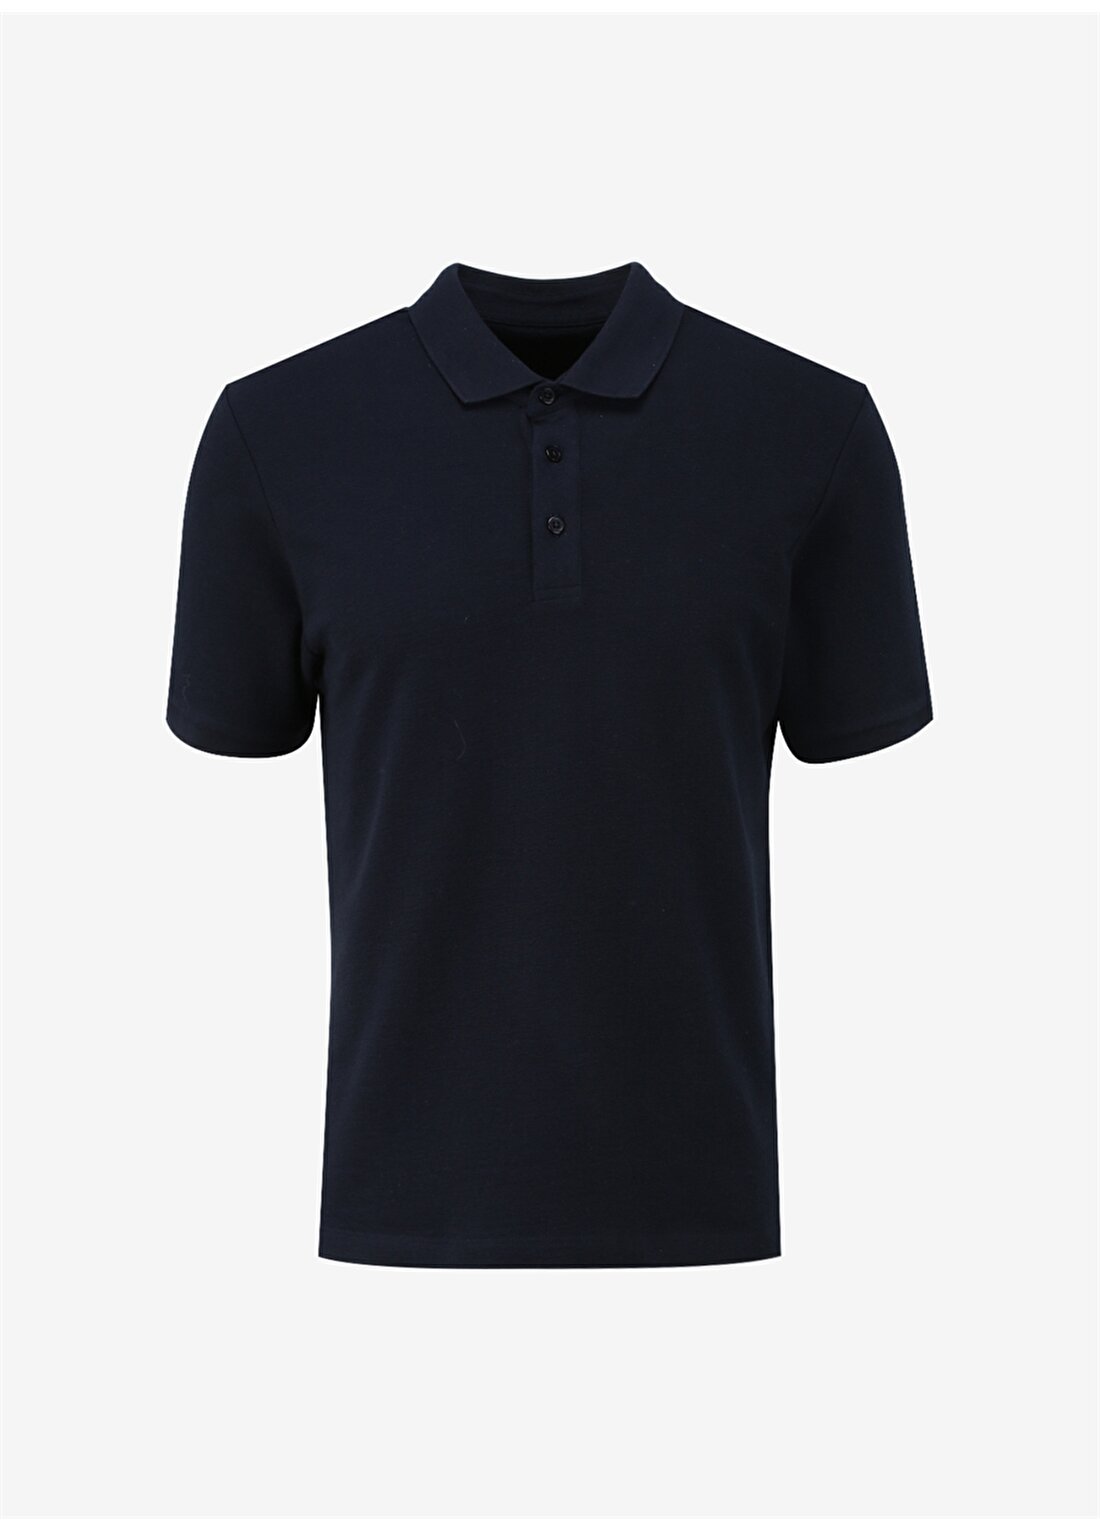 Network Lacivert Erkek Slim Fit Polo T-Shirt 1090399